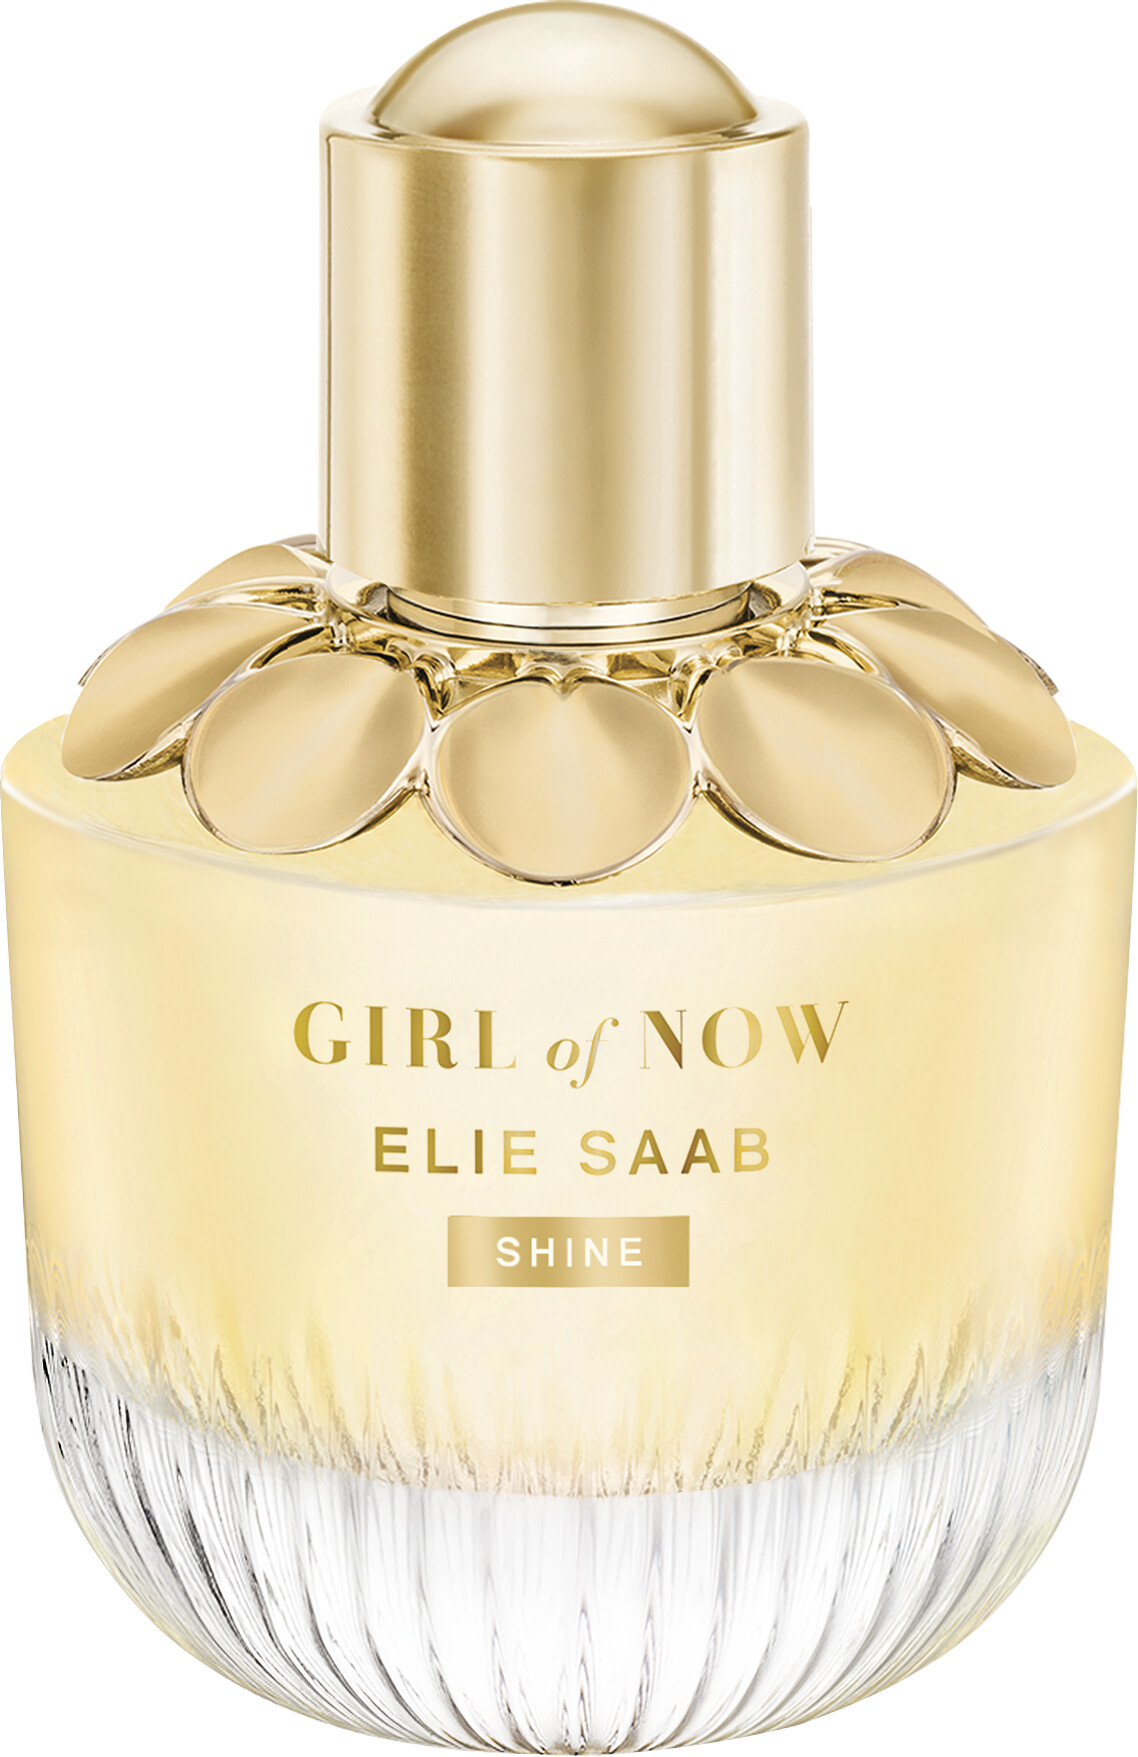 Elie Saab Girl of Now Shine Eau de Parfum Spray 50ml